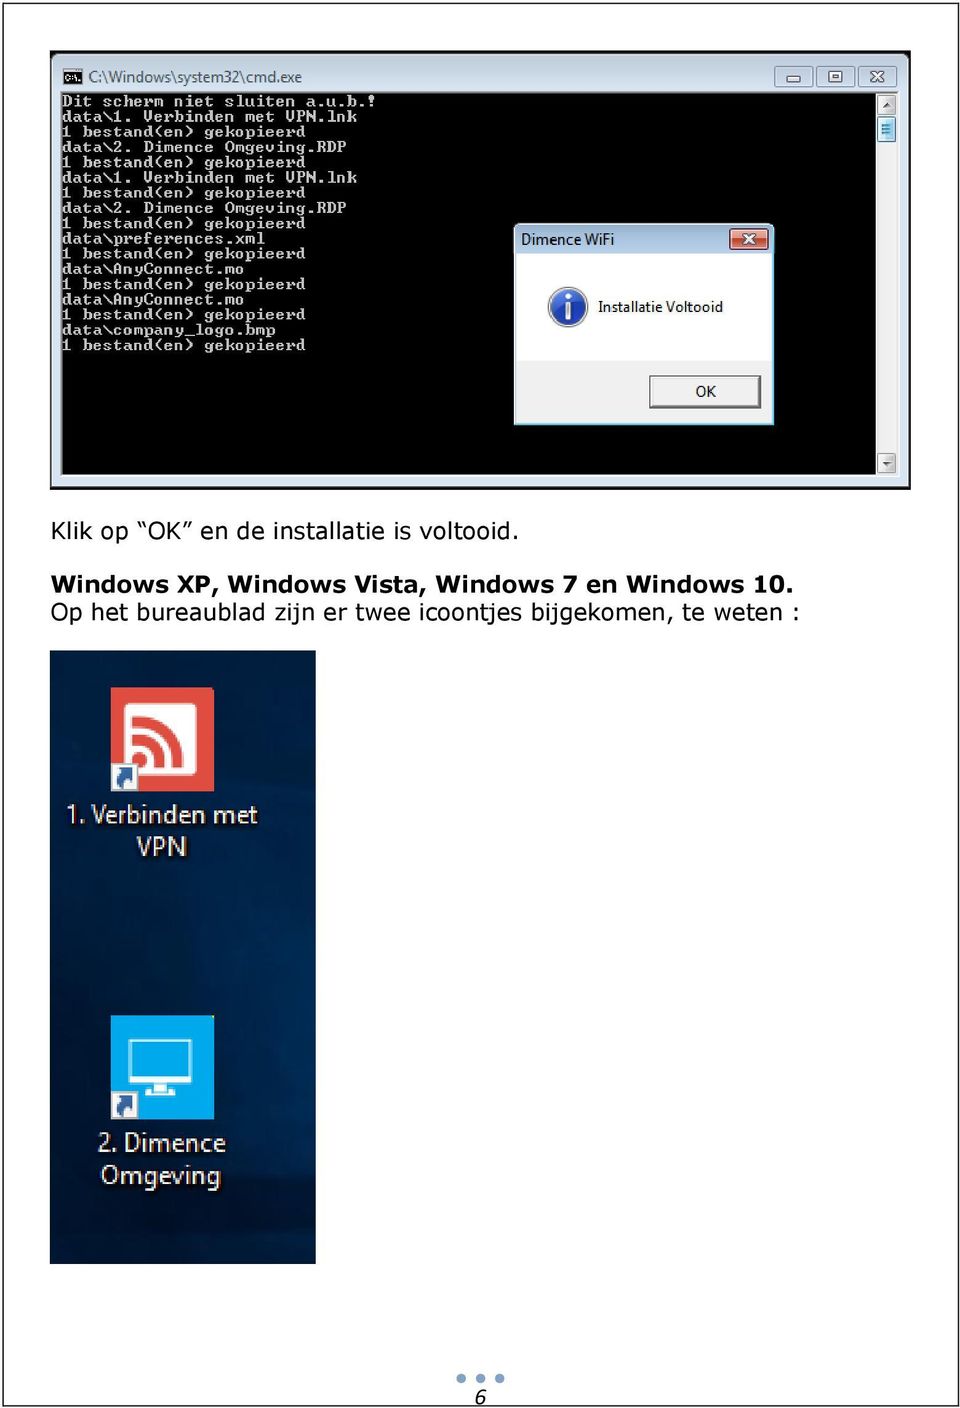 Windows XP, Windows Vista, Windows 7 en